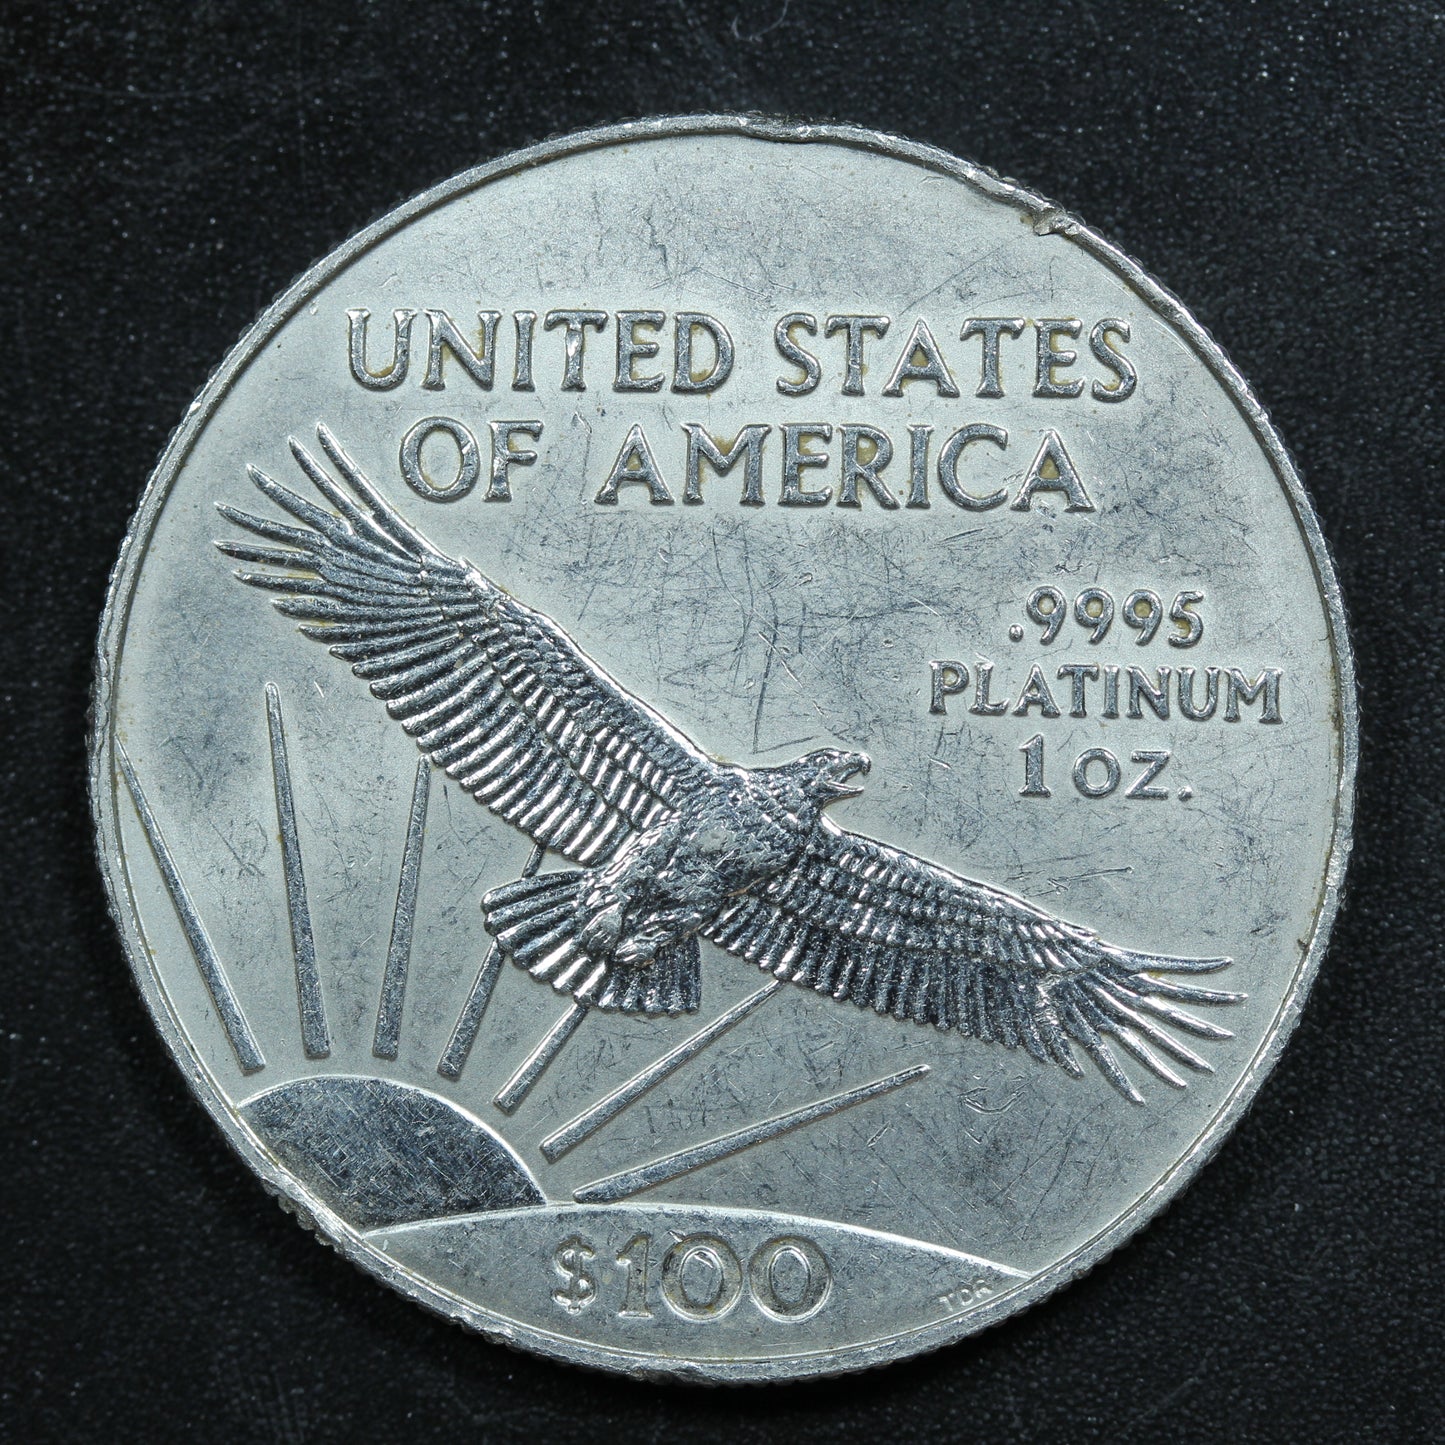 1998 1 oz $100 Platinum American Eagle Bullion Coin - See Pics